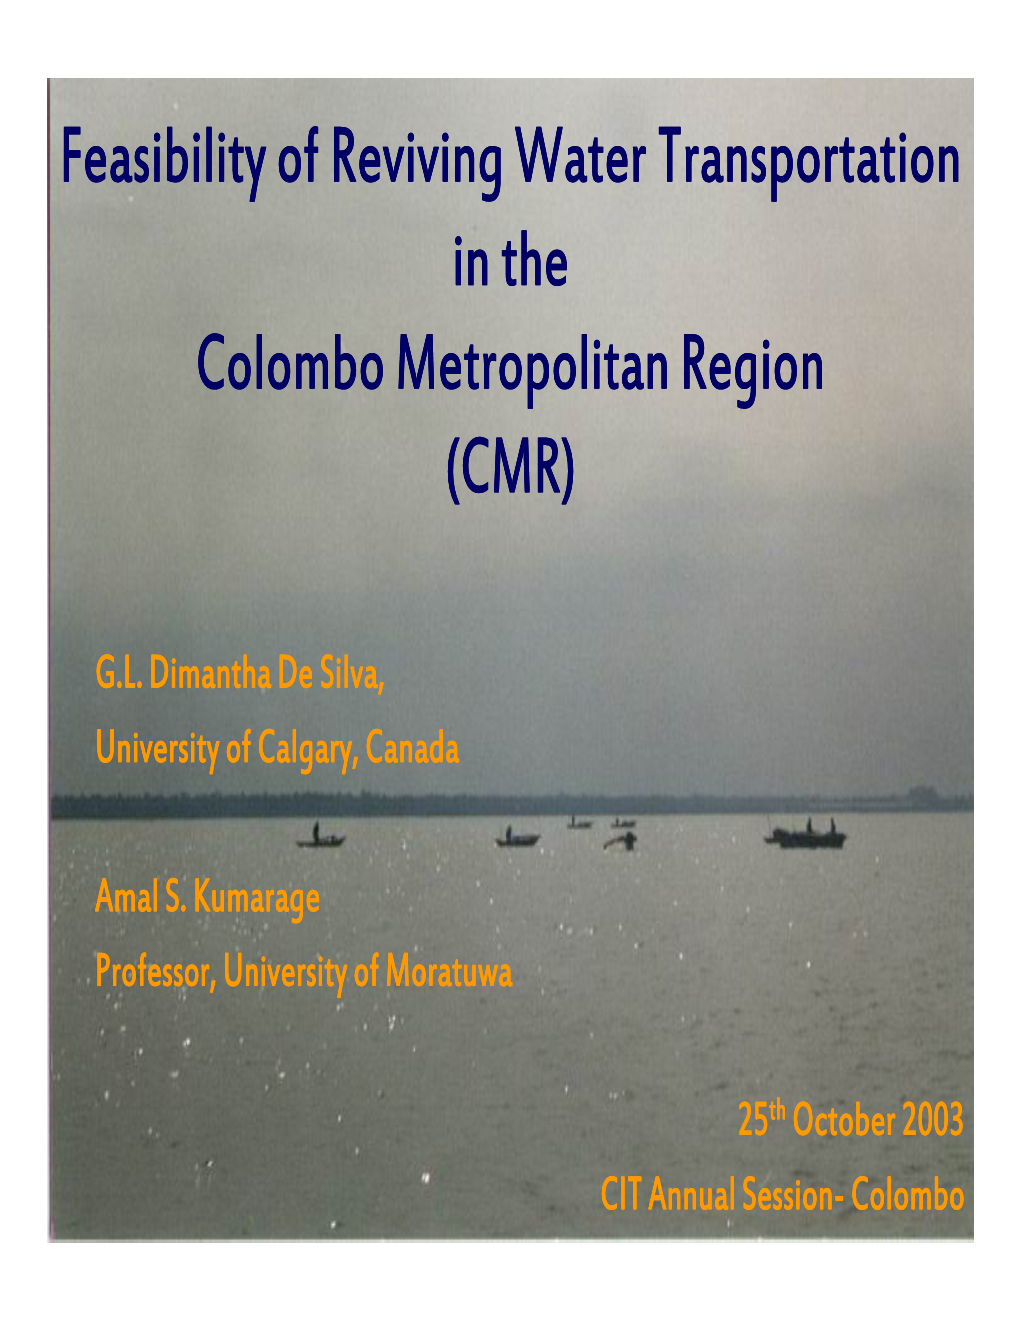 Feasibility of Reviving Water Transportation in the Colombo Metropolitan Region (CMR)